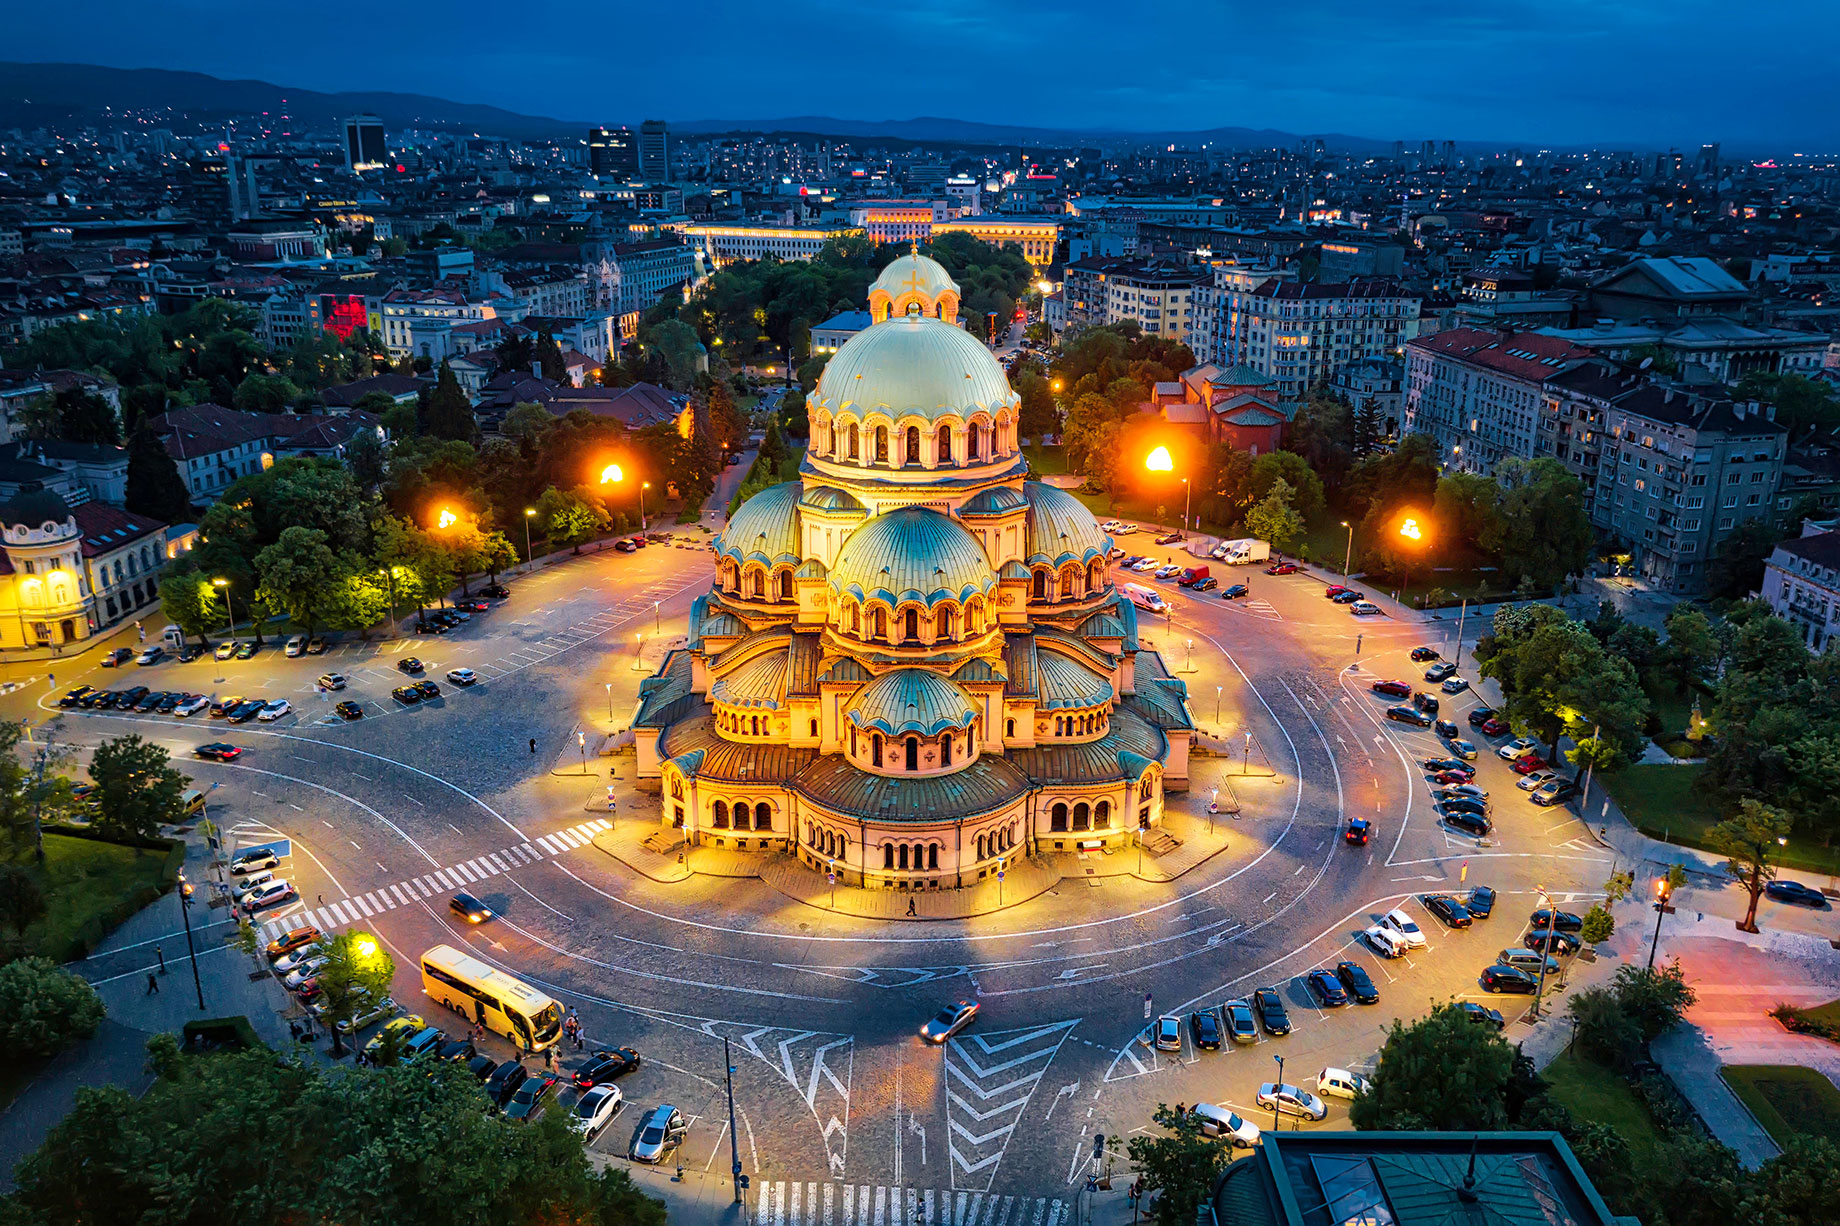 Alexander Nevsky Cathedral - Sofia, Bulgaria